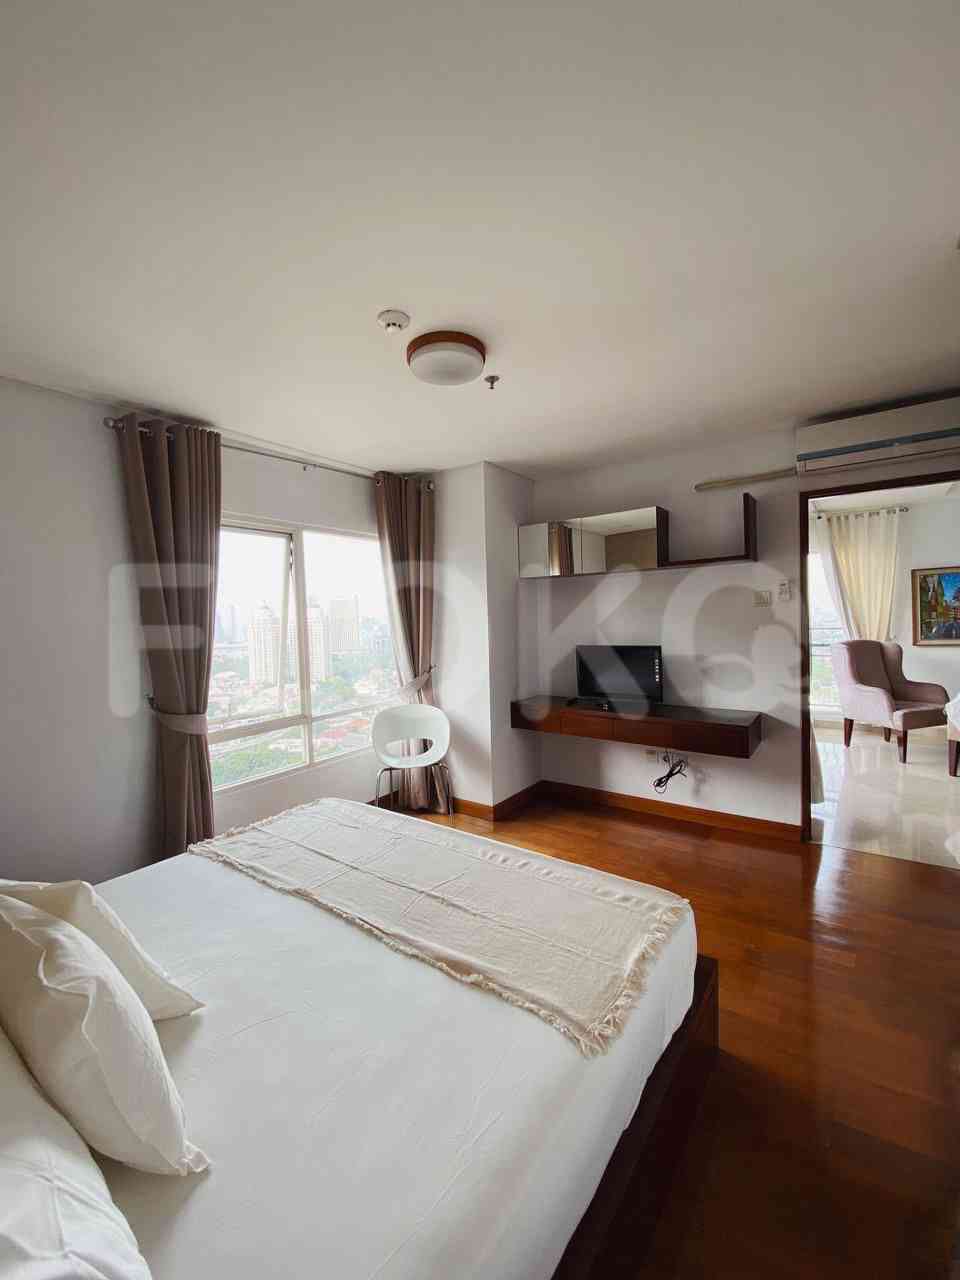 4 Bedroom on 26th Floor for Rent in Permata Hijau Suites Apartment - fpef10 6